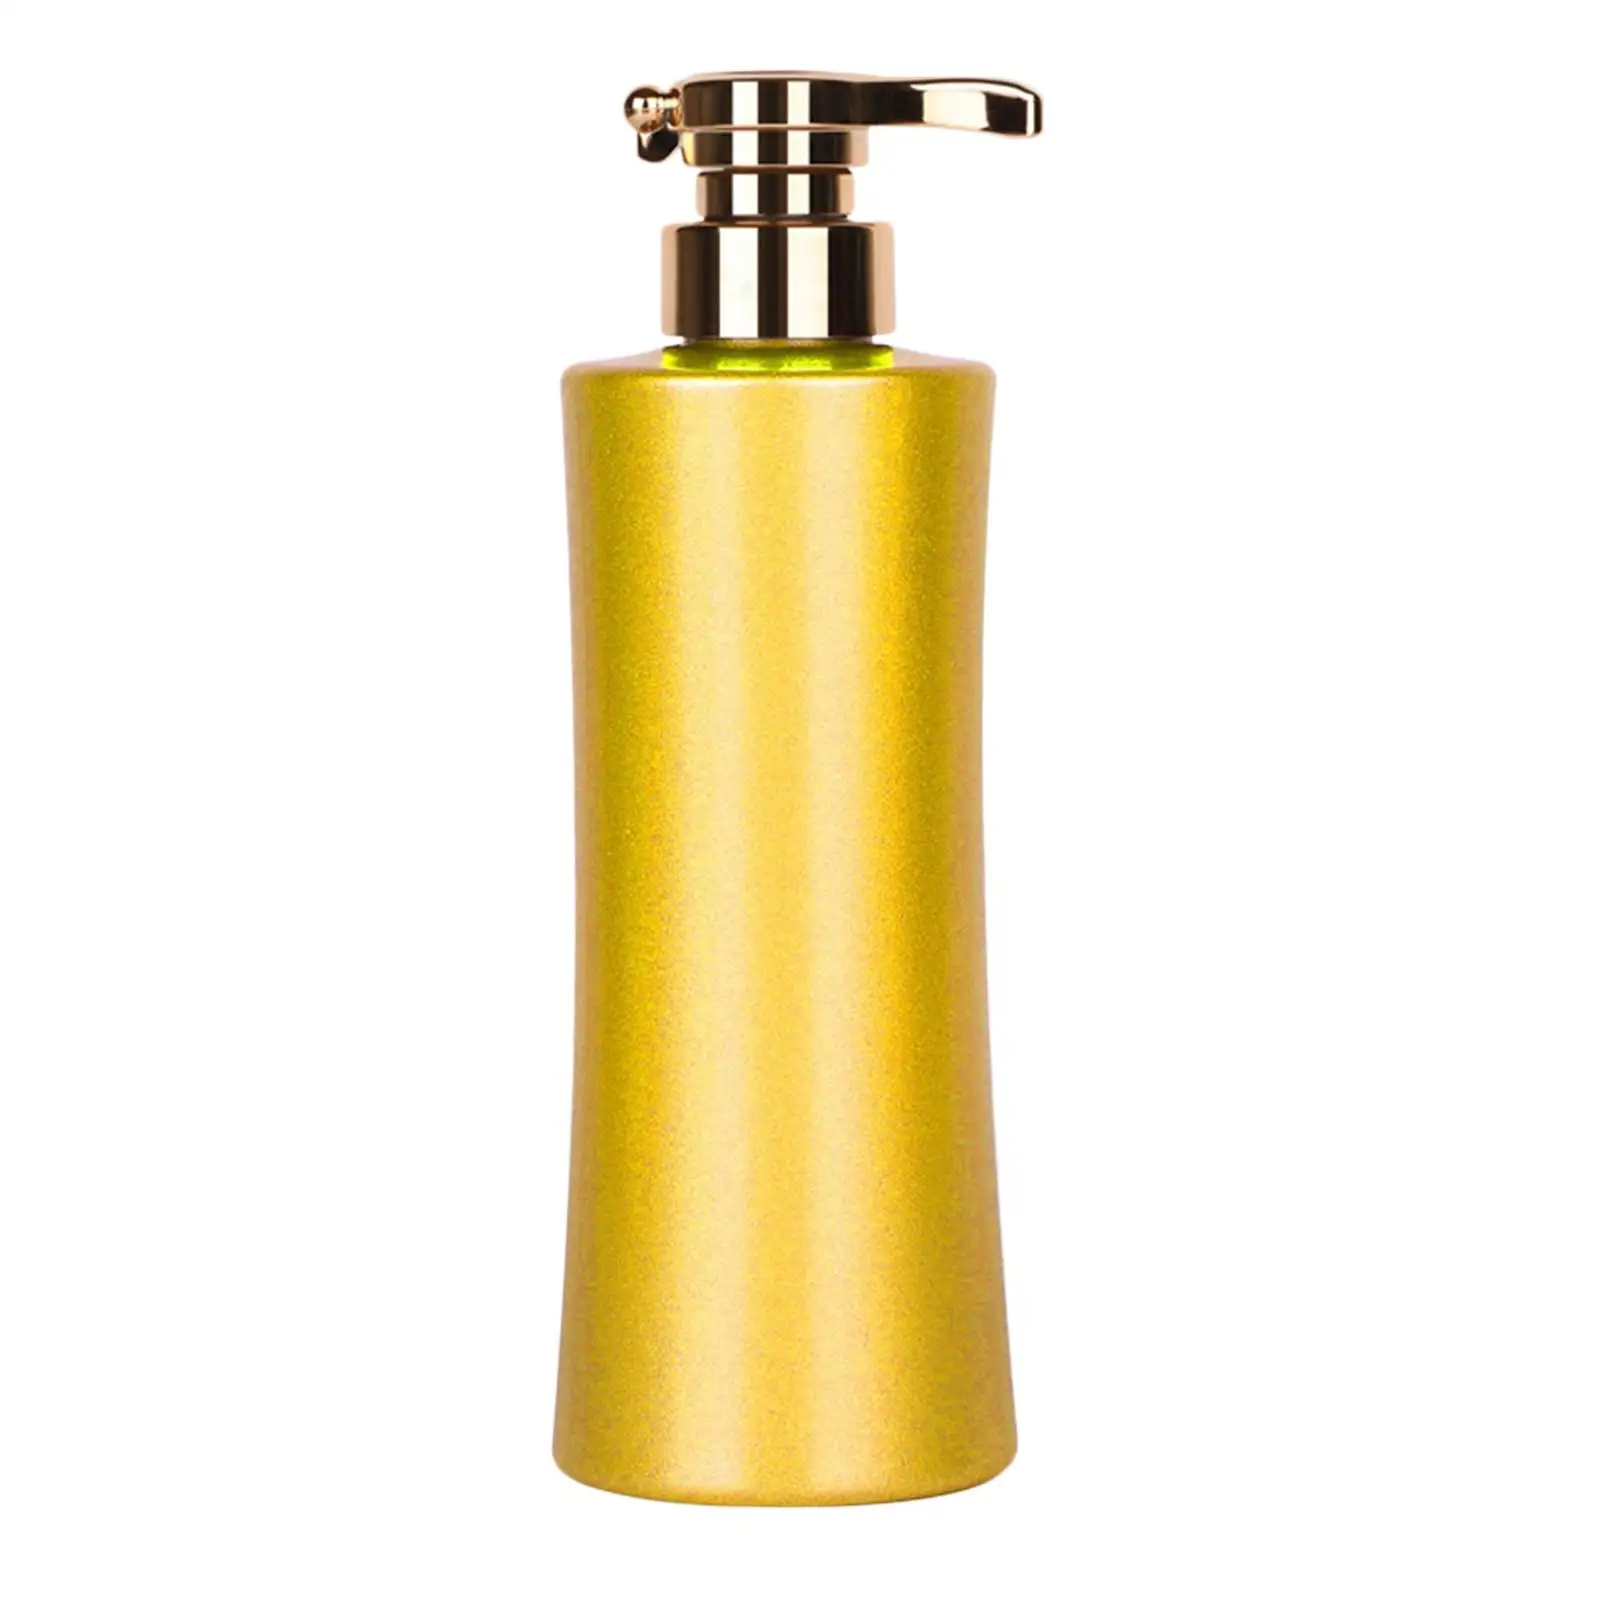 Modern Soap Dispenser Lotion Bottle Refillable Shampoo Bottle Pump 500ml for Bathroom Accessories Restroom Countertop Home Hotel